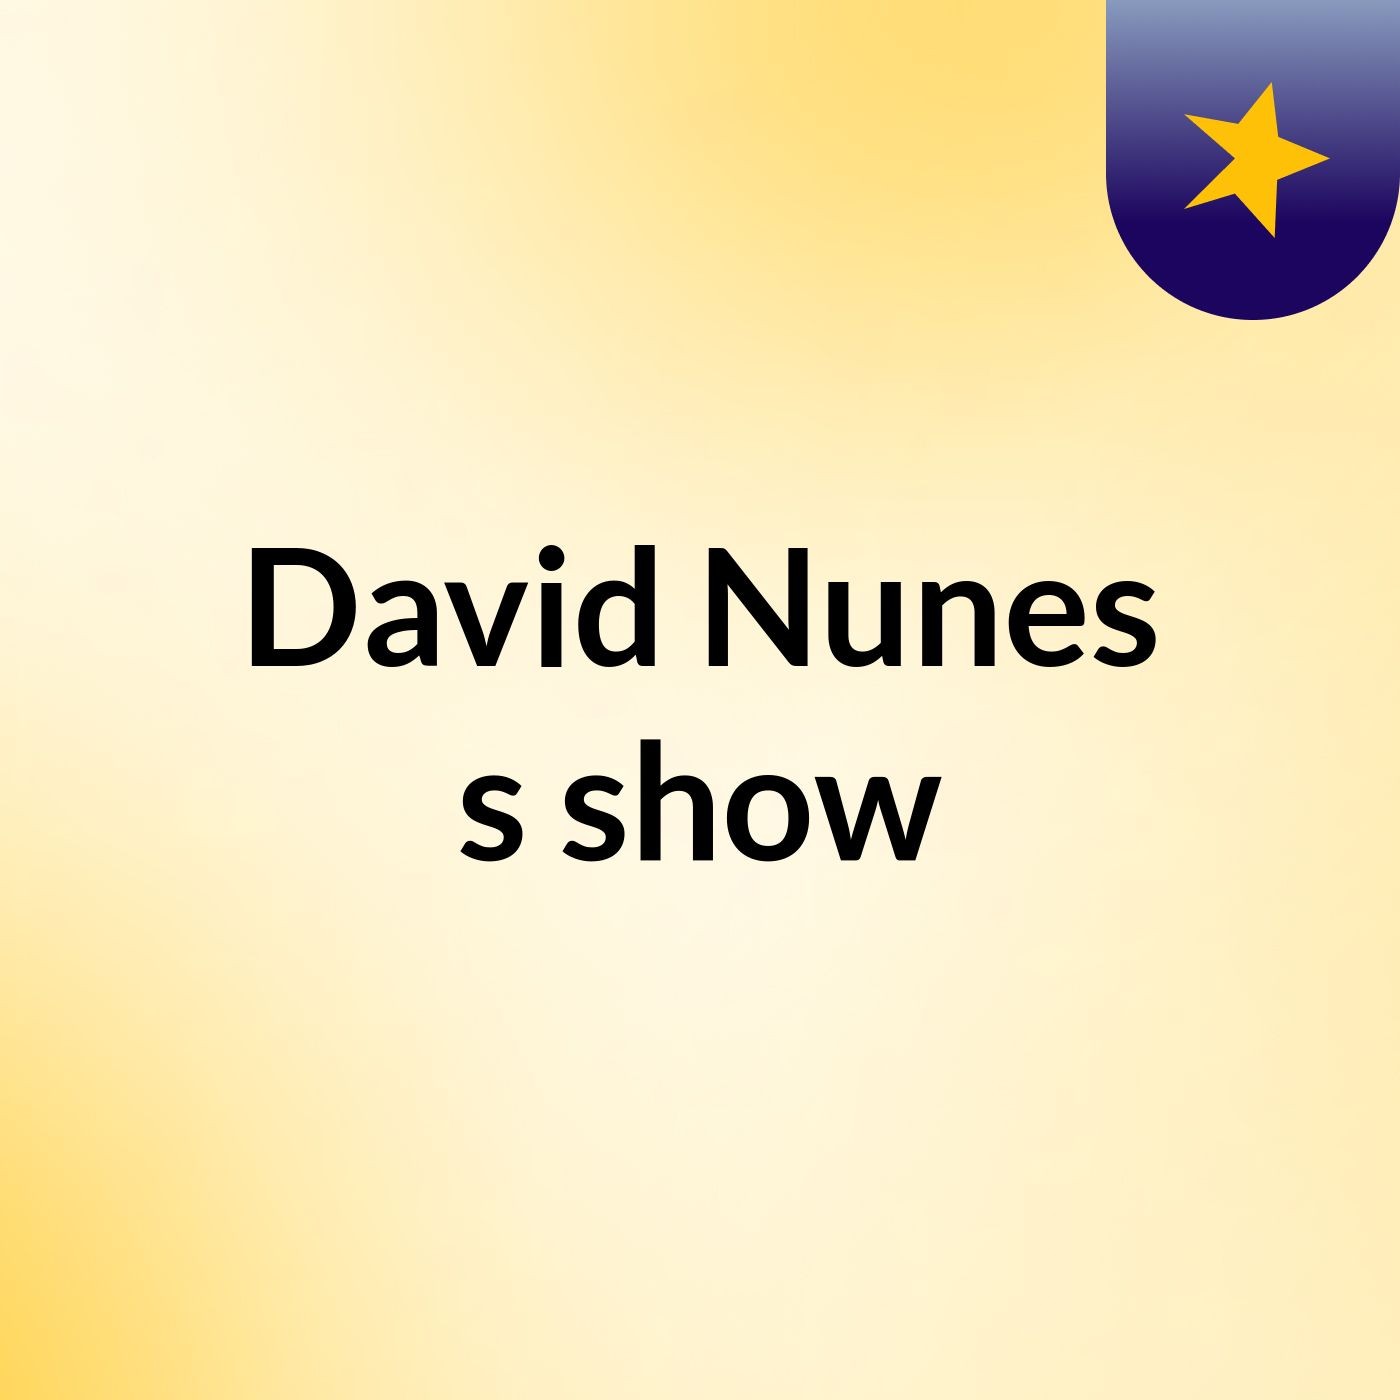 David Nunes's show